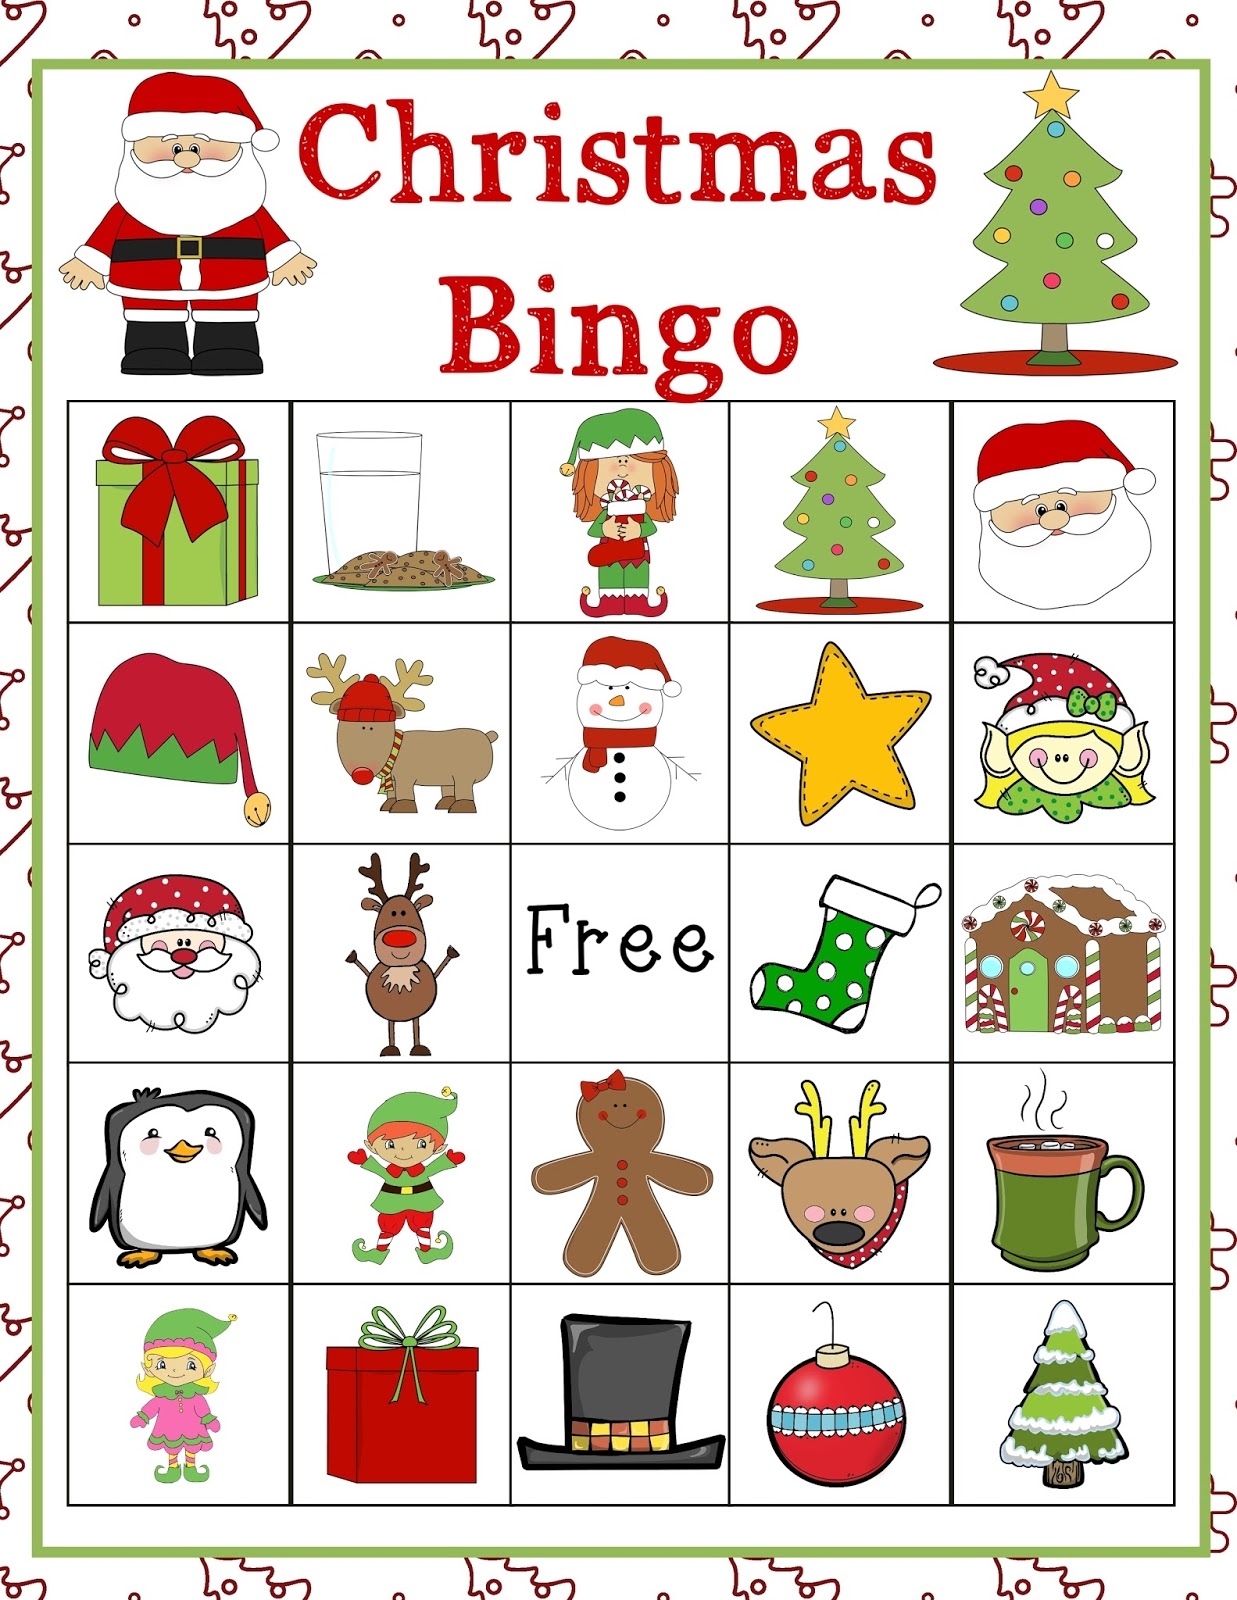 The Cozy Red Cottage Christmas Bingo Free Printable Game - Free Christmas Bingo Game Printable